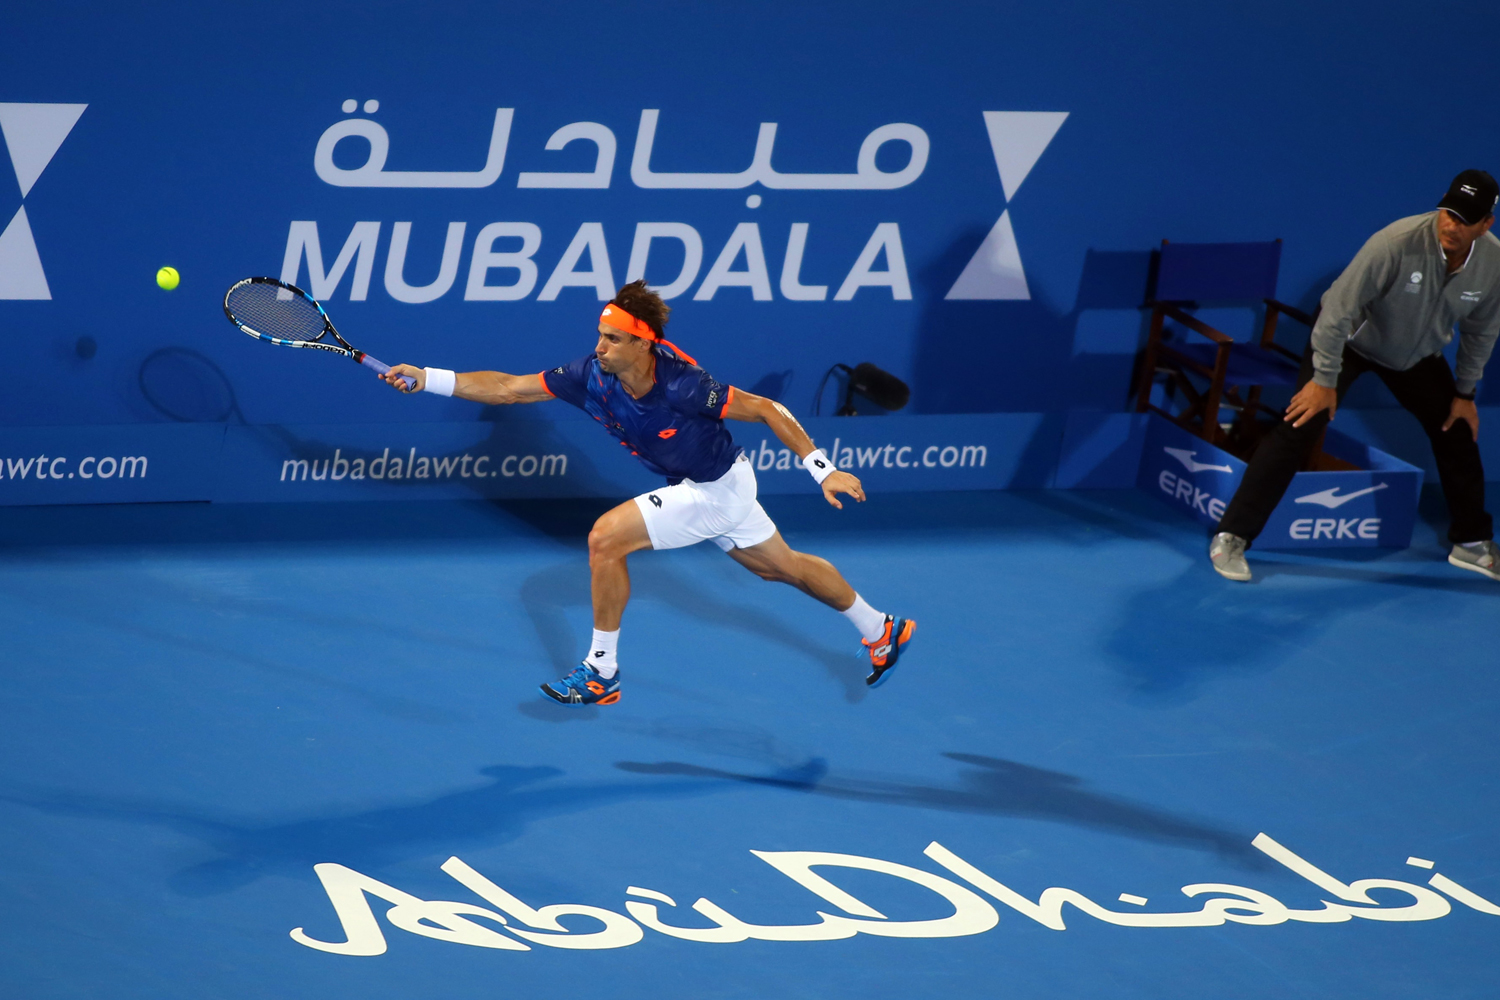 Match schedule for Mubadala World Tennis Championship in Abu Dhabi